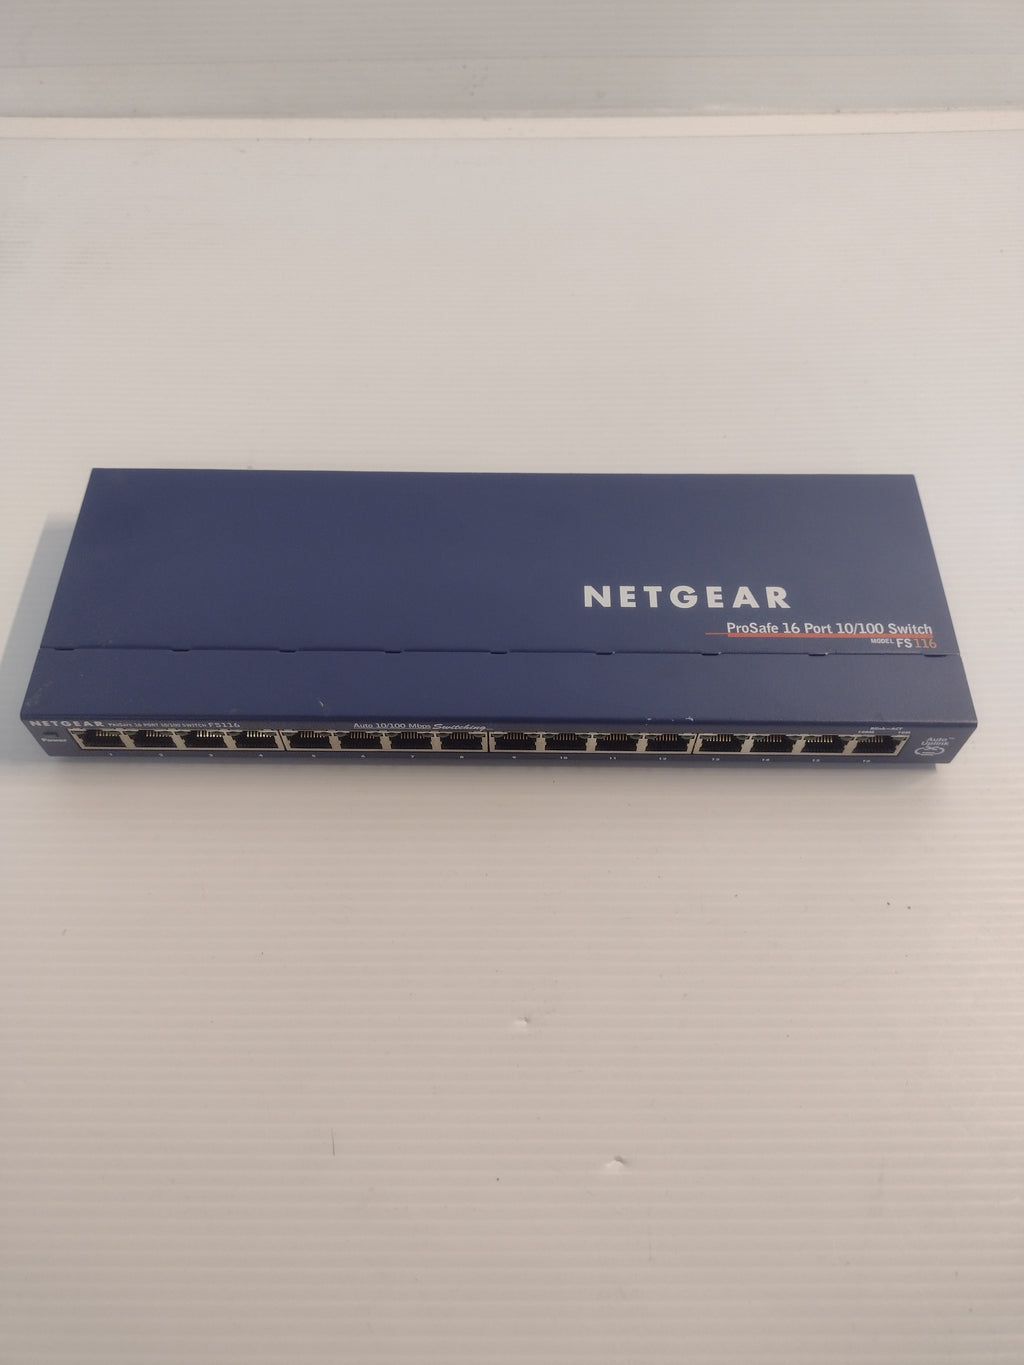 NETGEAR ProSafe FS116 16 Port 10/100 Fast Ethernet Unmanaged Switch